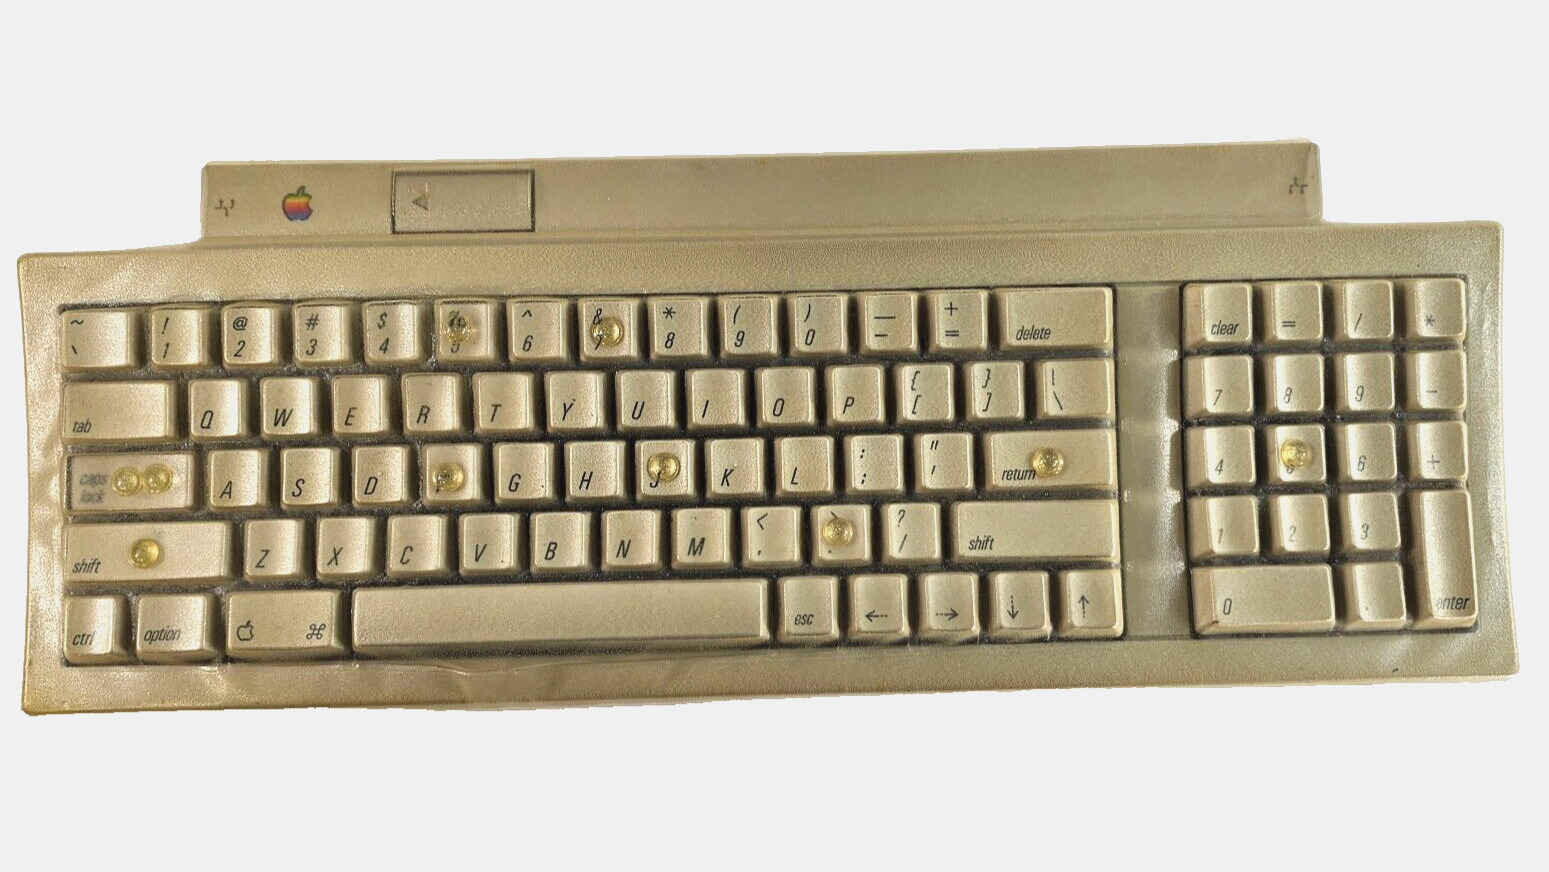 1990 Apple Keyboard II (2) Macintosh M0487 1990 - No Cord - Works